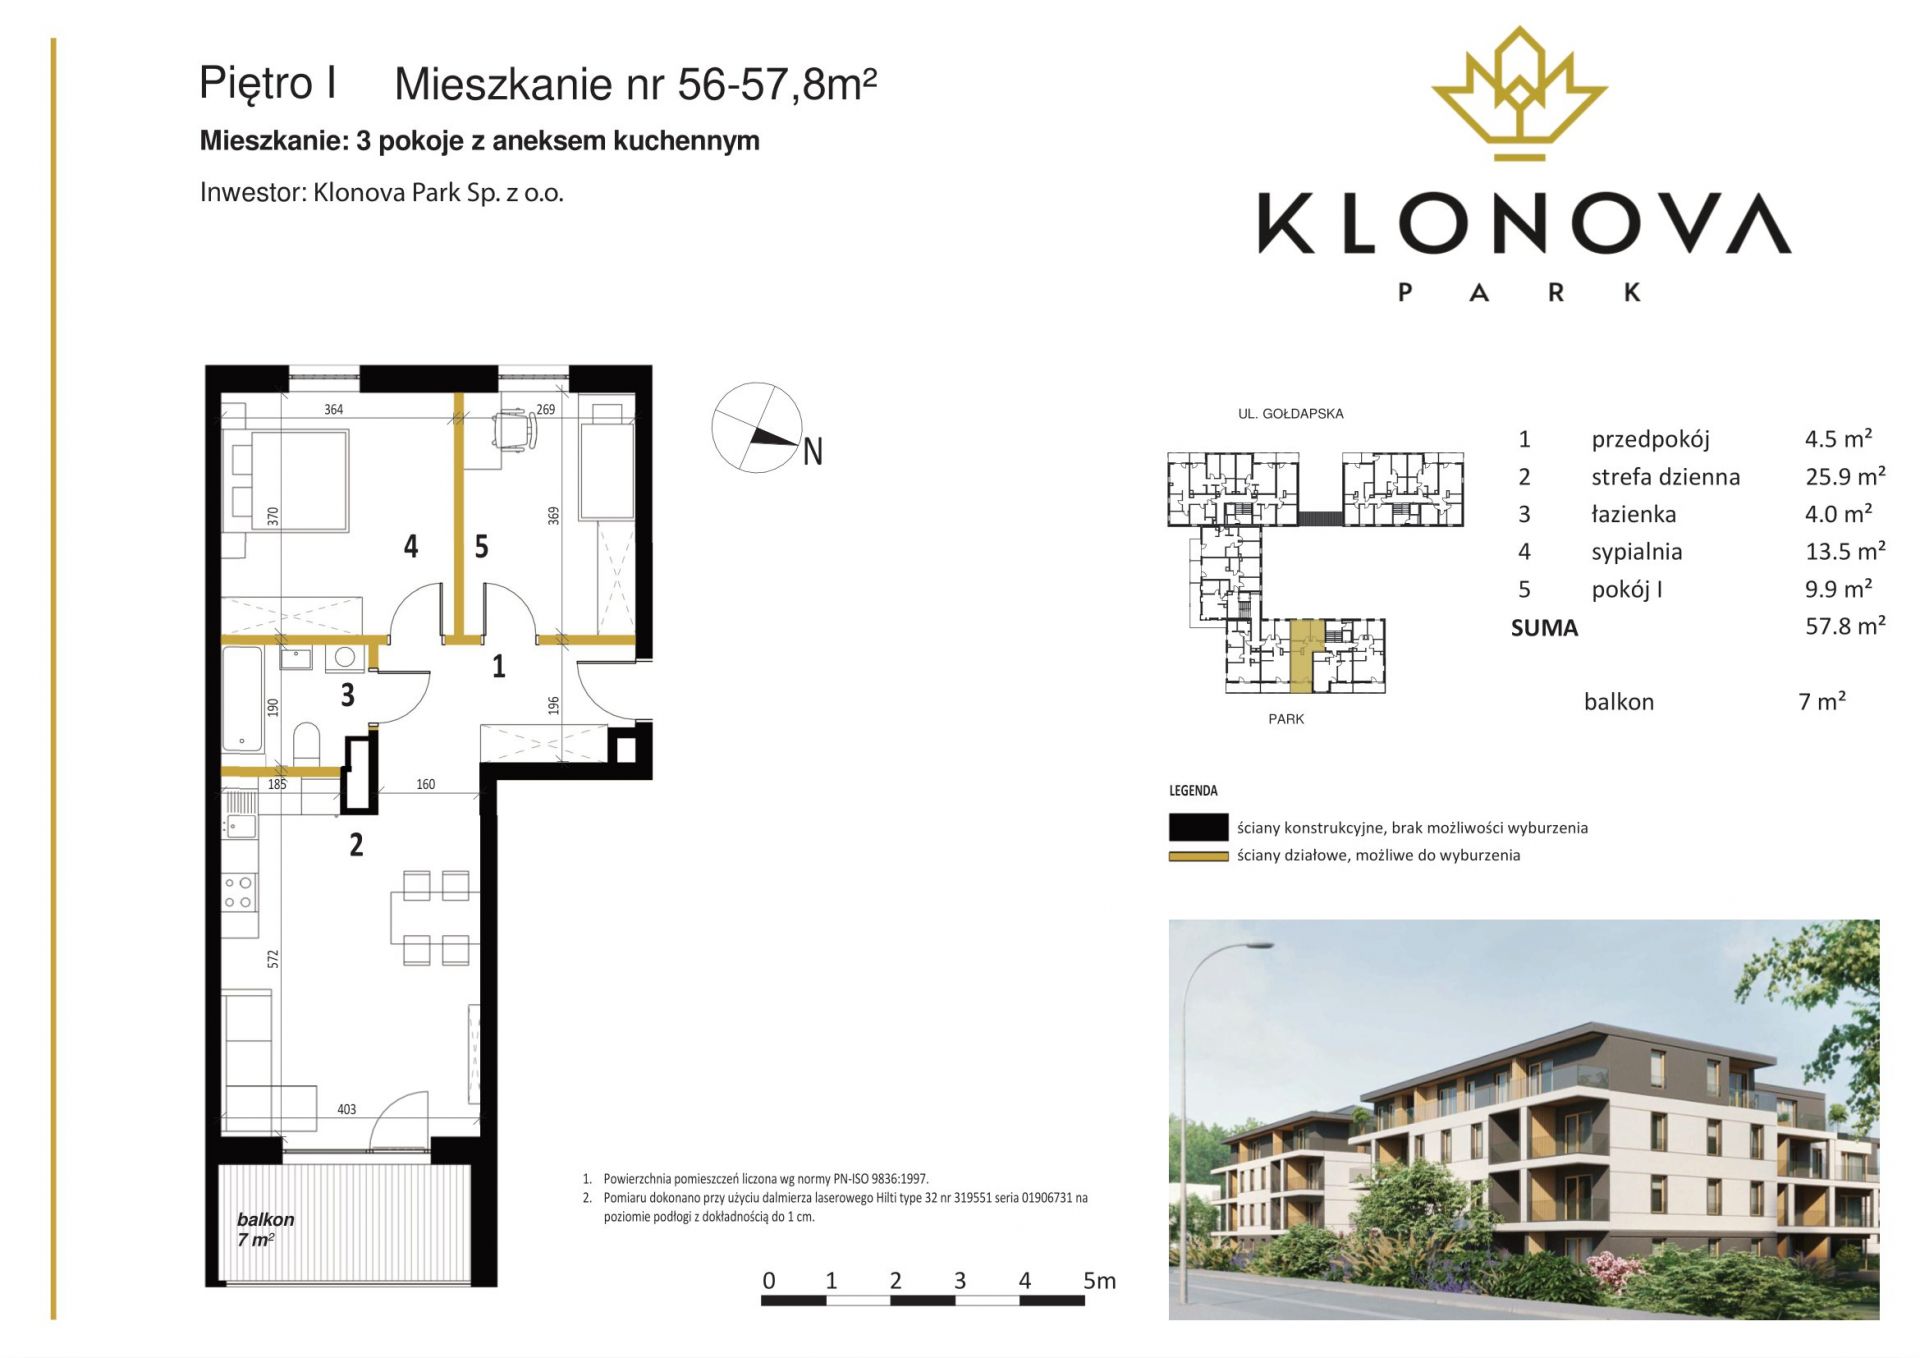 Apartamenty Klonova Park - Plan mieszkania 56